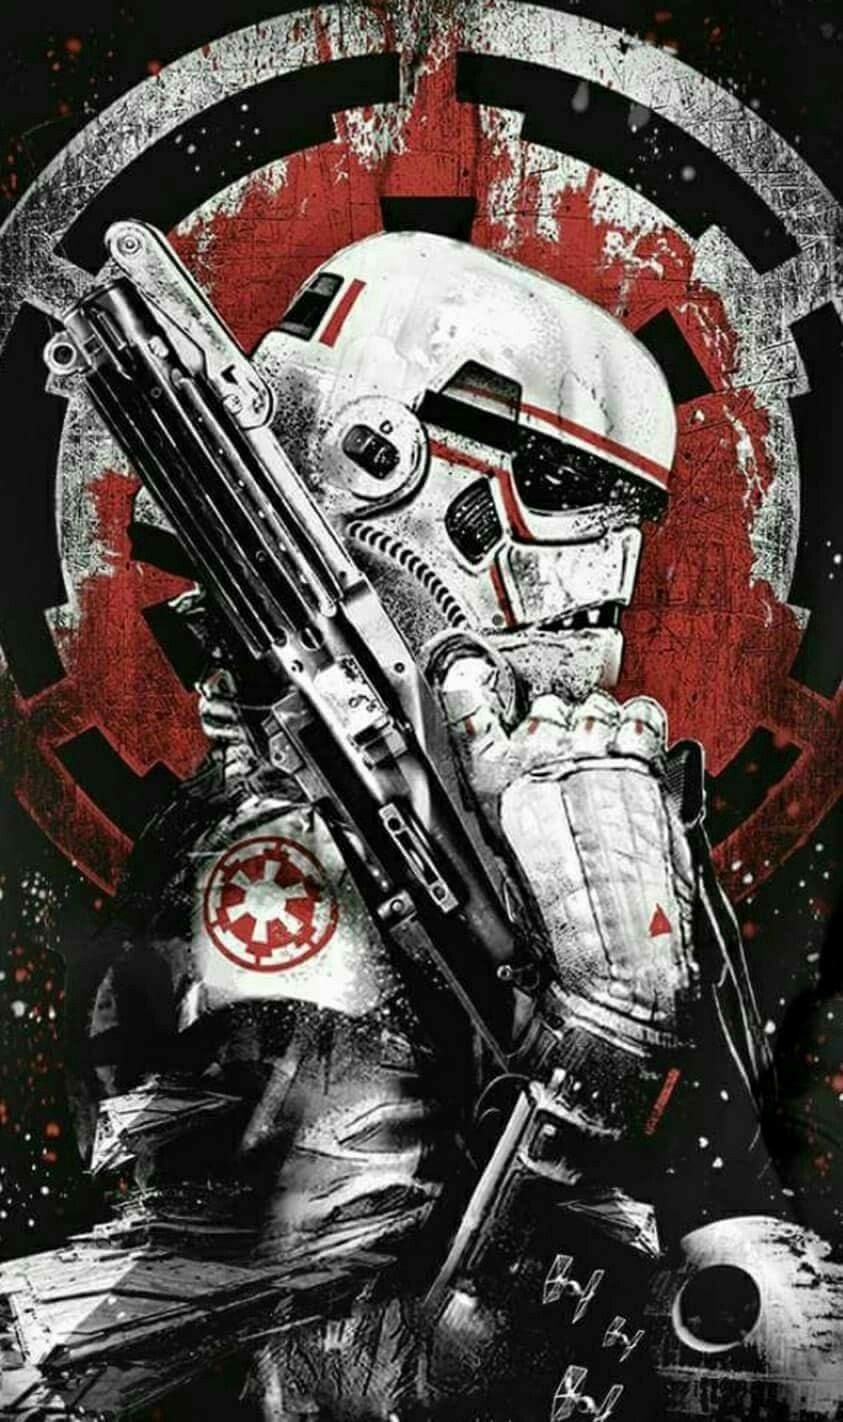 First Order Stormtrooper. Star wars wallpaper, Star wars picture, Star wars art